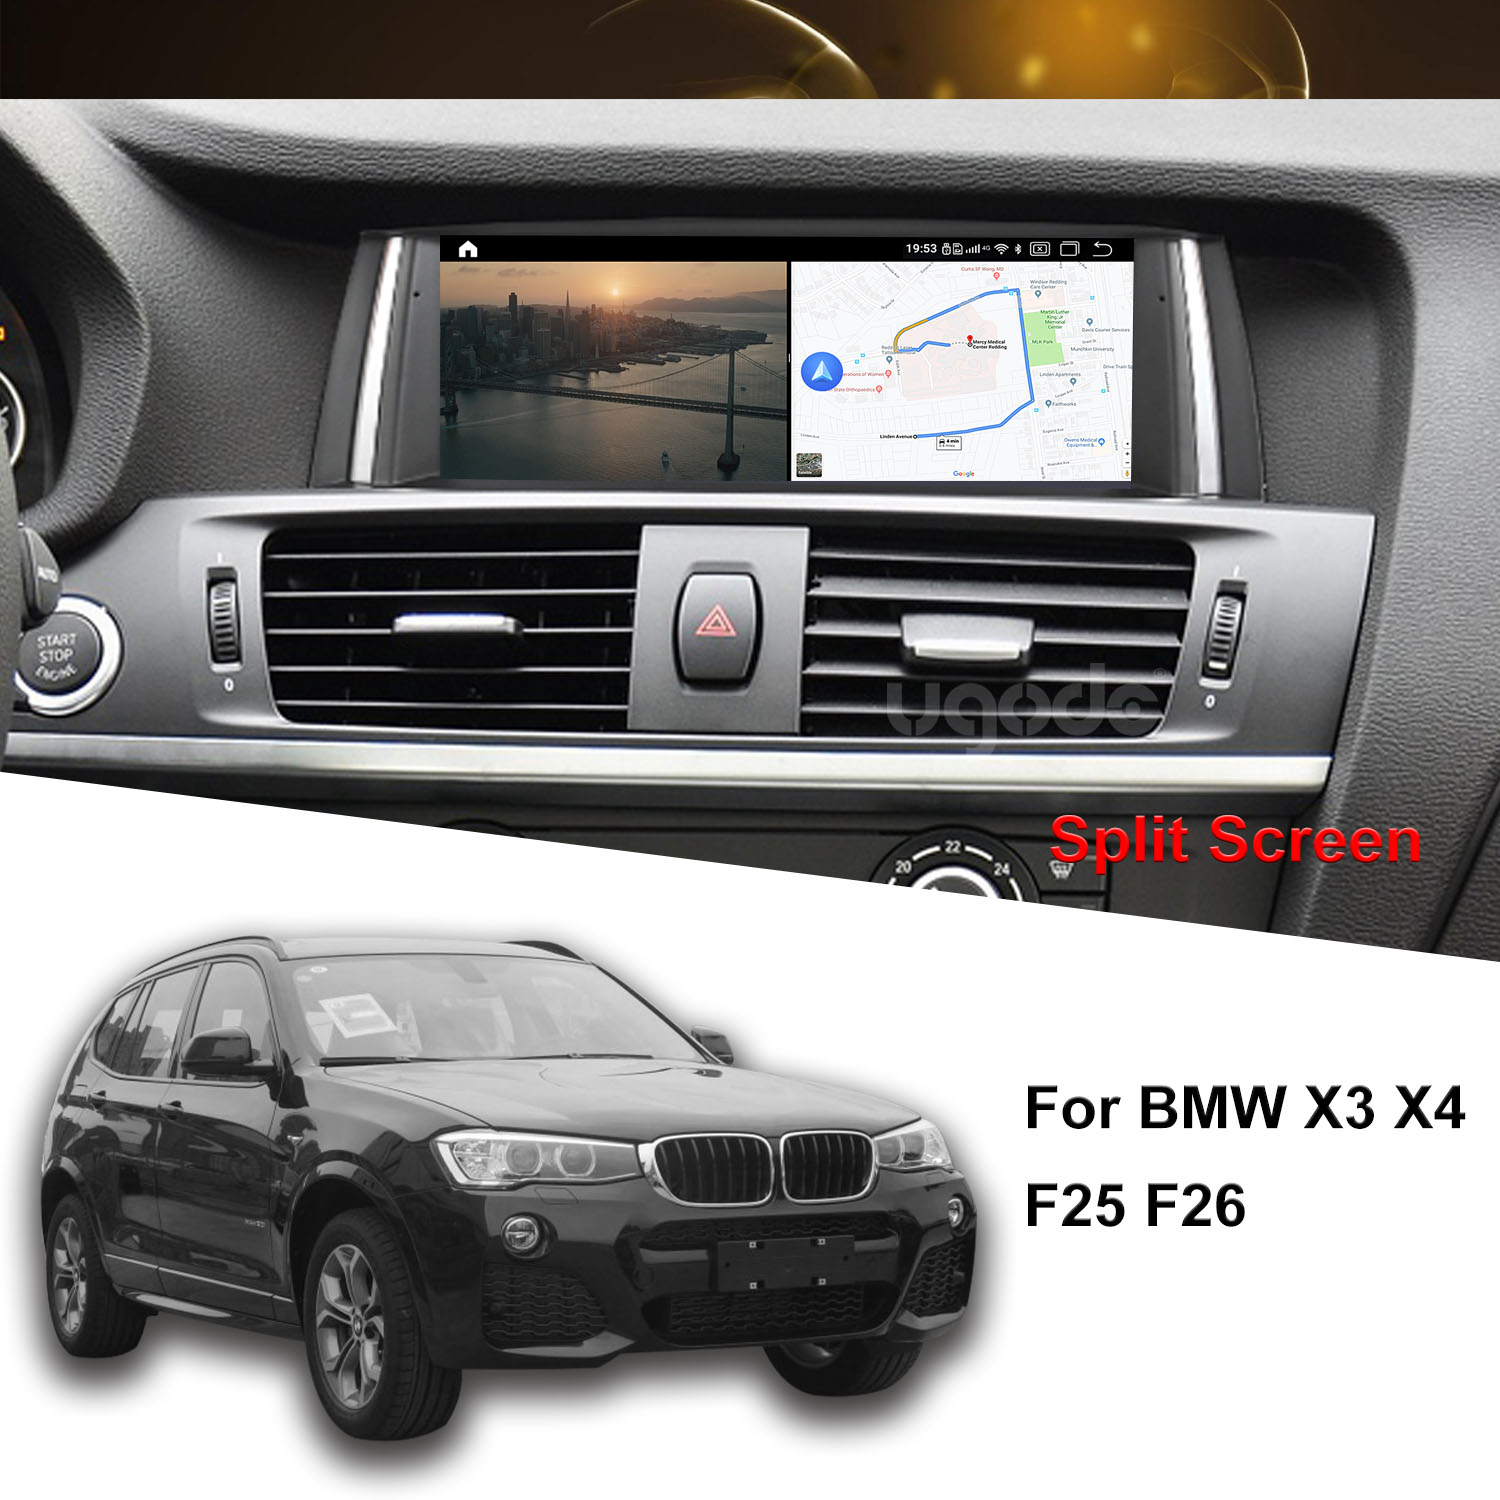 https://cdn.globalso.com/ugode/BMW-X3-F25-Android-Screen-2.jpg